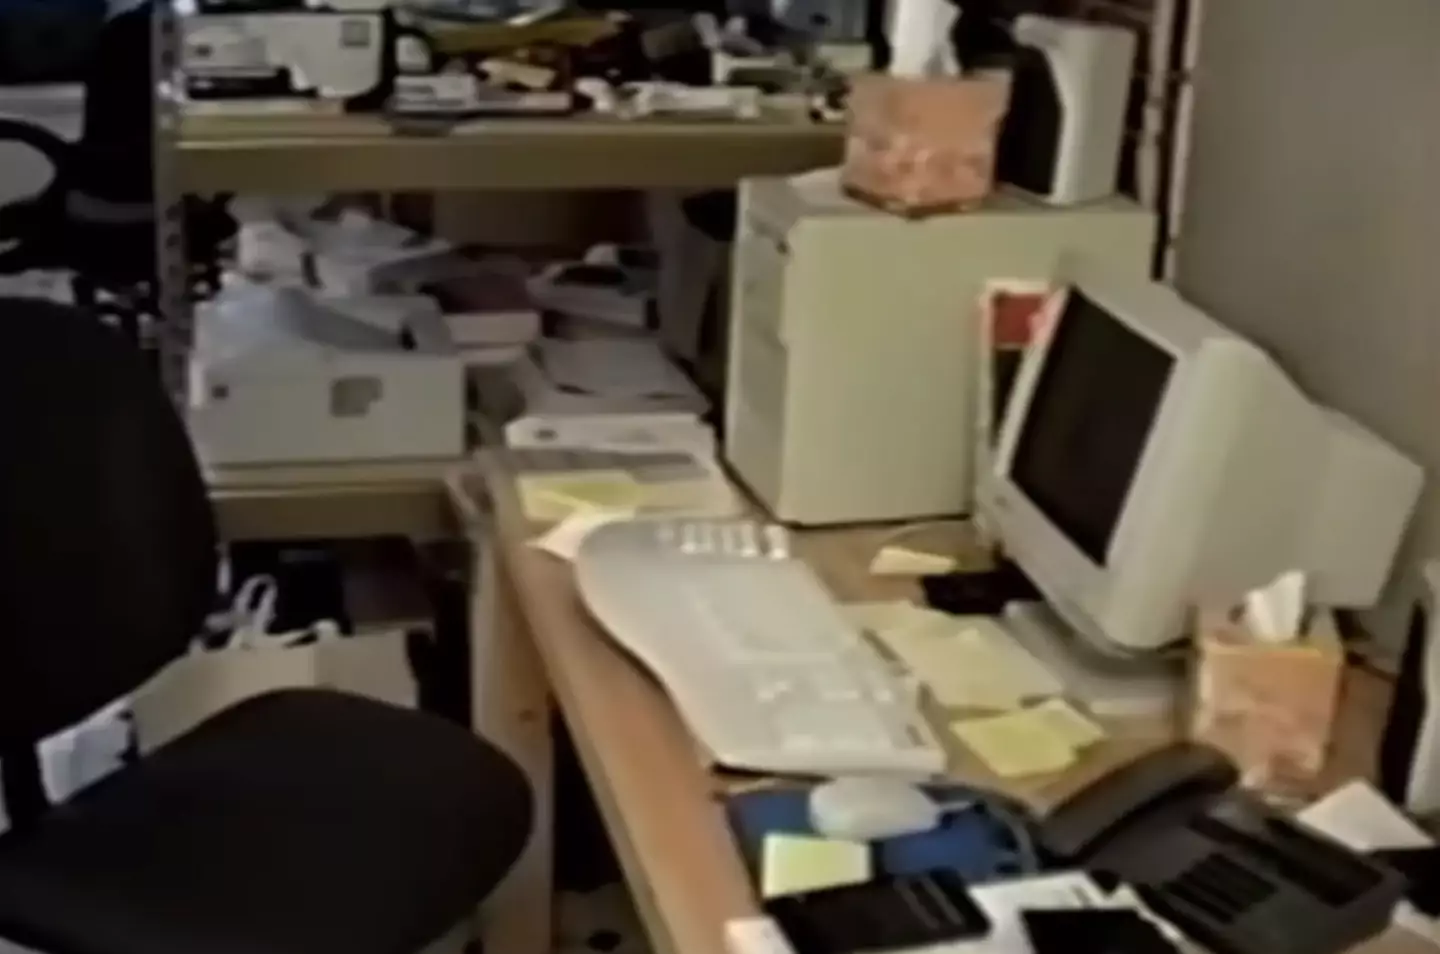 Bezos' old desk.